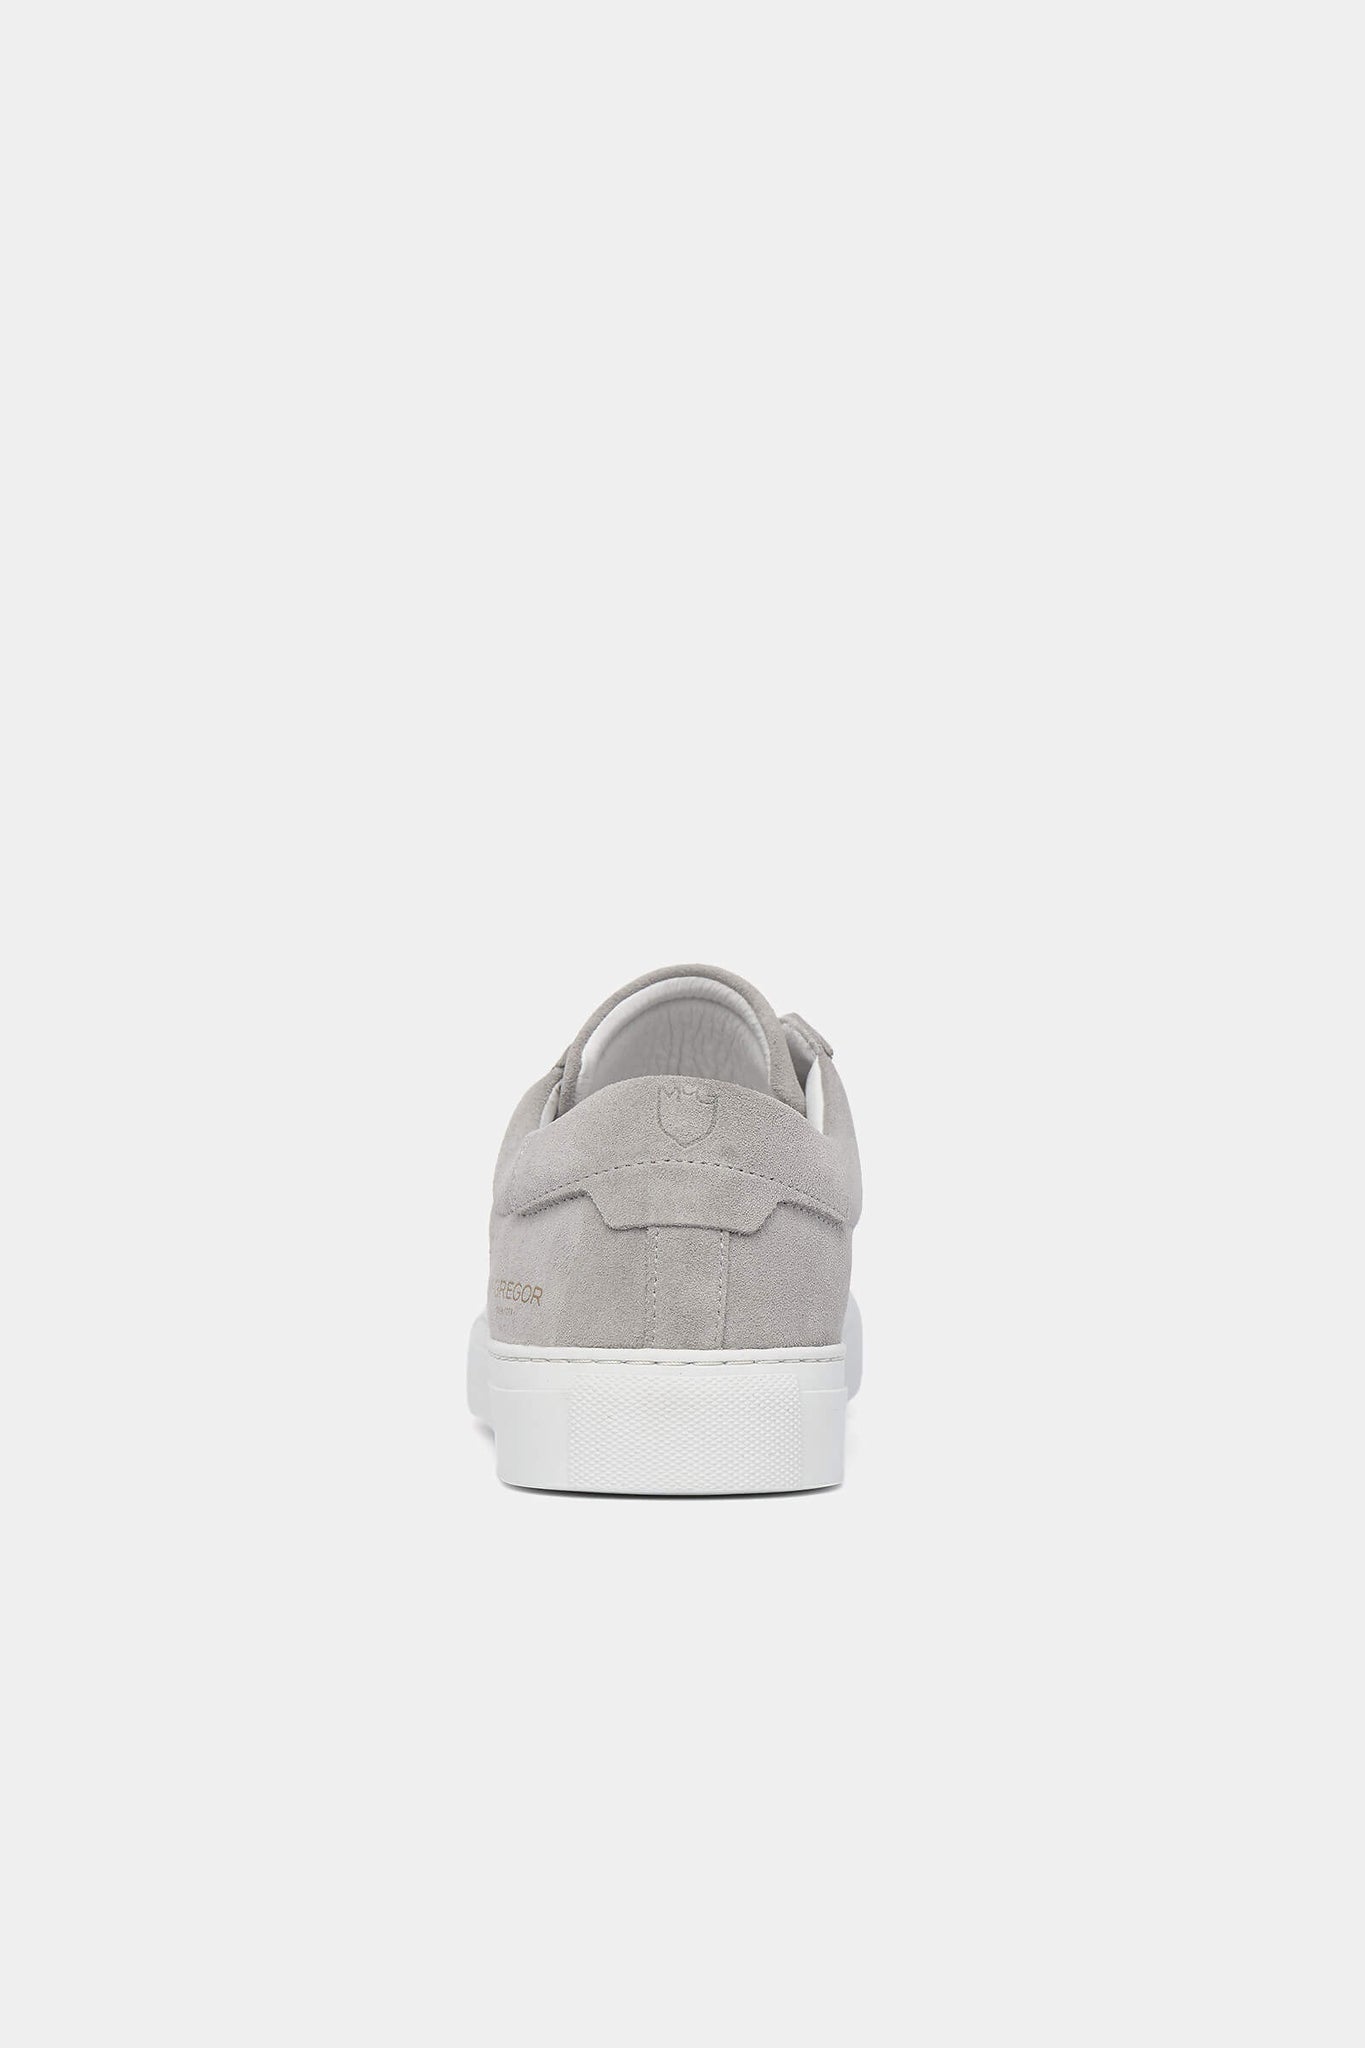 light gray sneakers